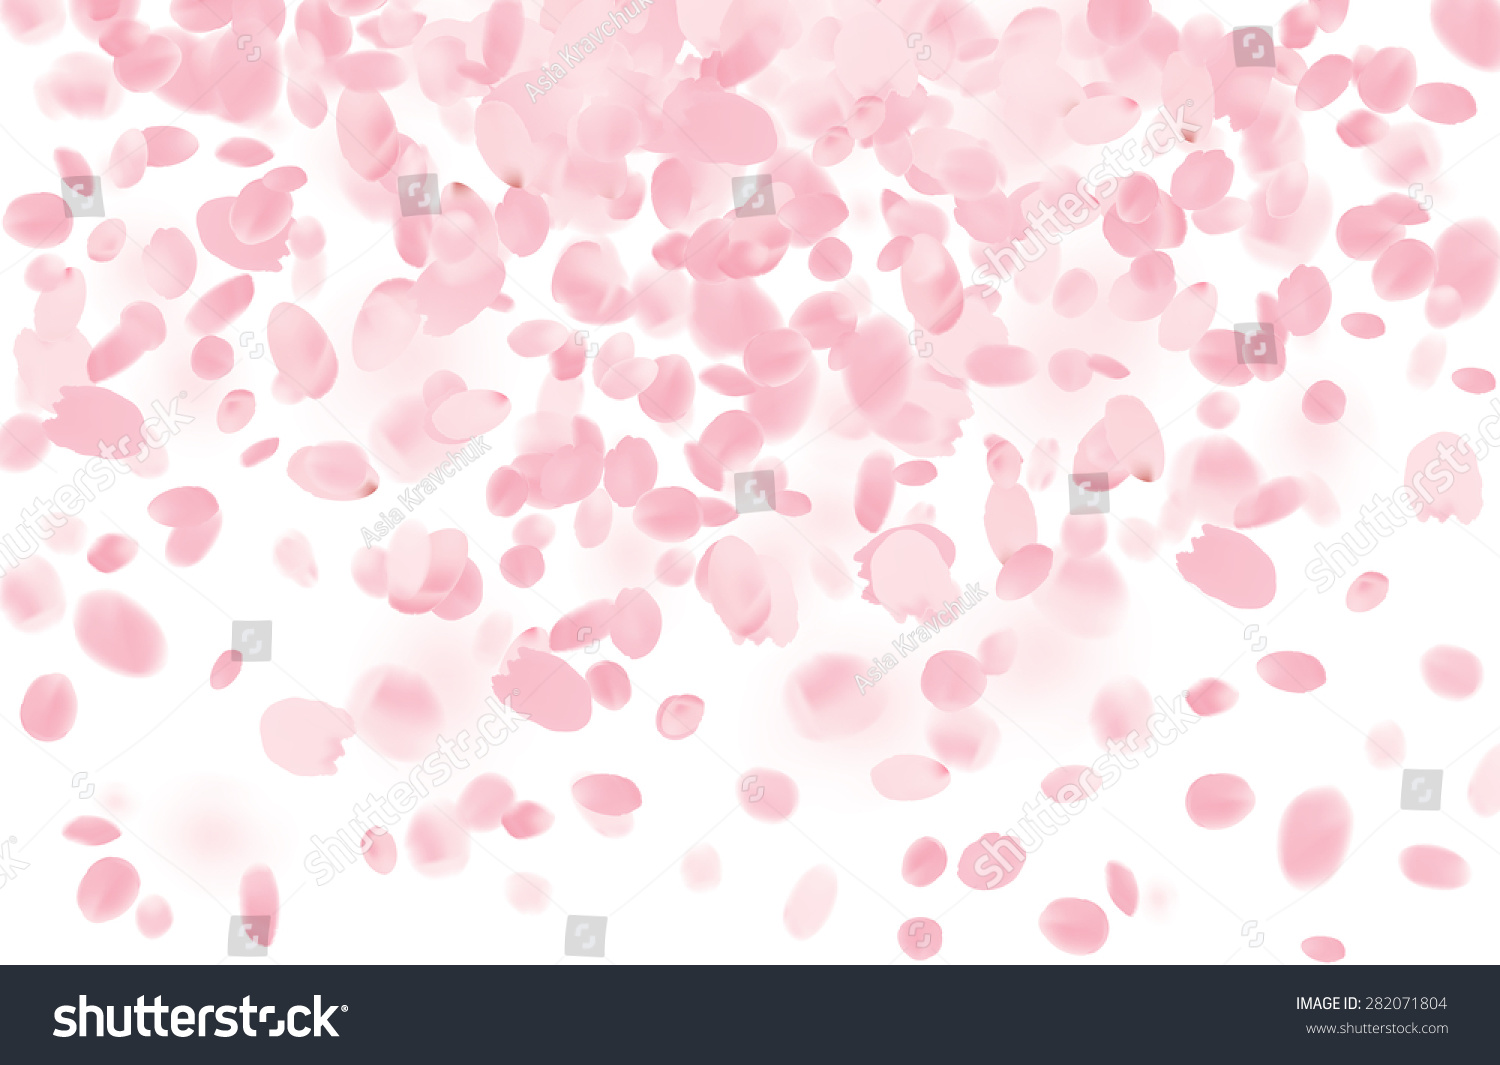 Vector Falling Sakura Pink Petals Background - 282071804 : Shutterstock